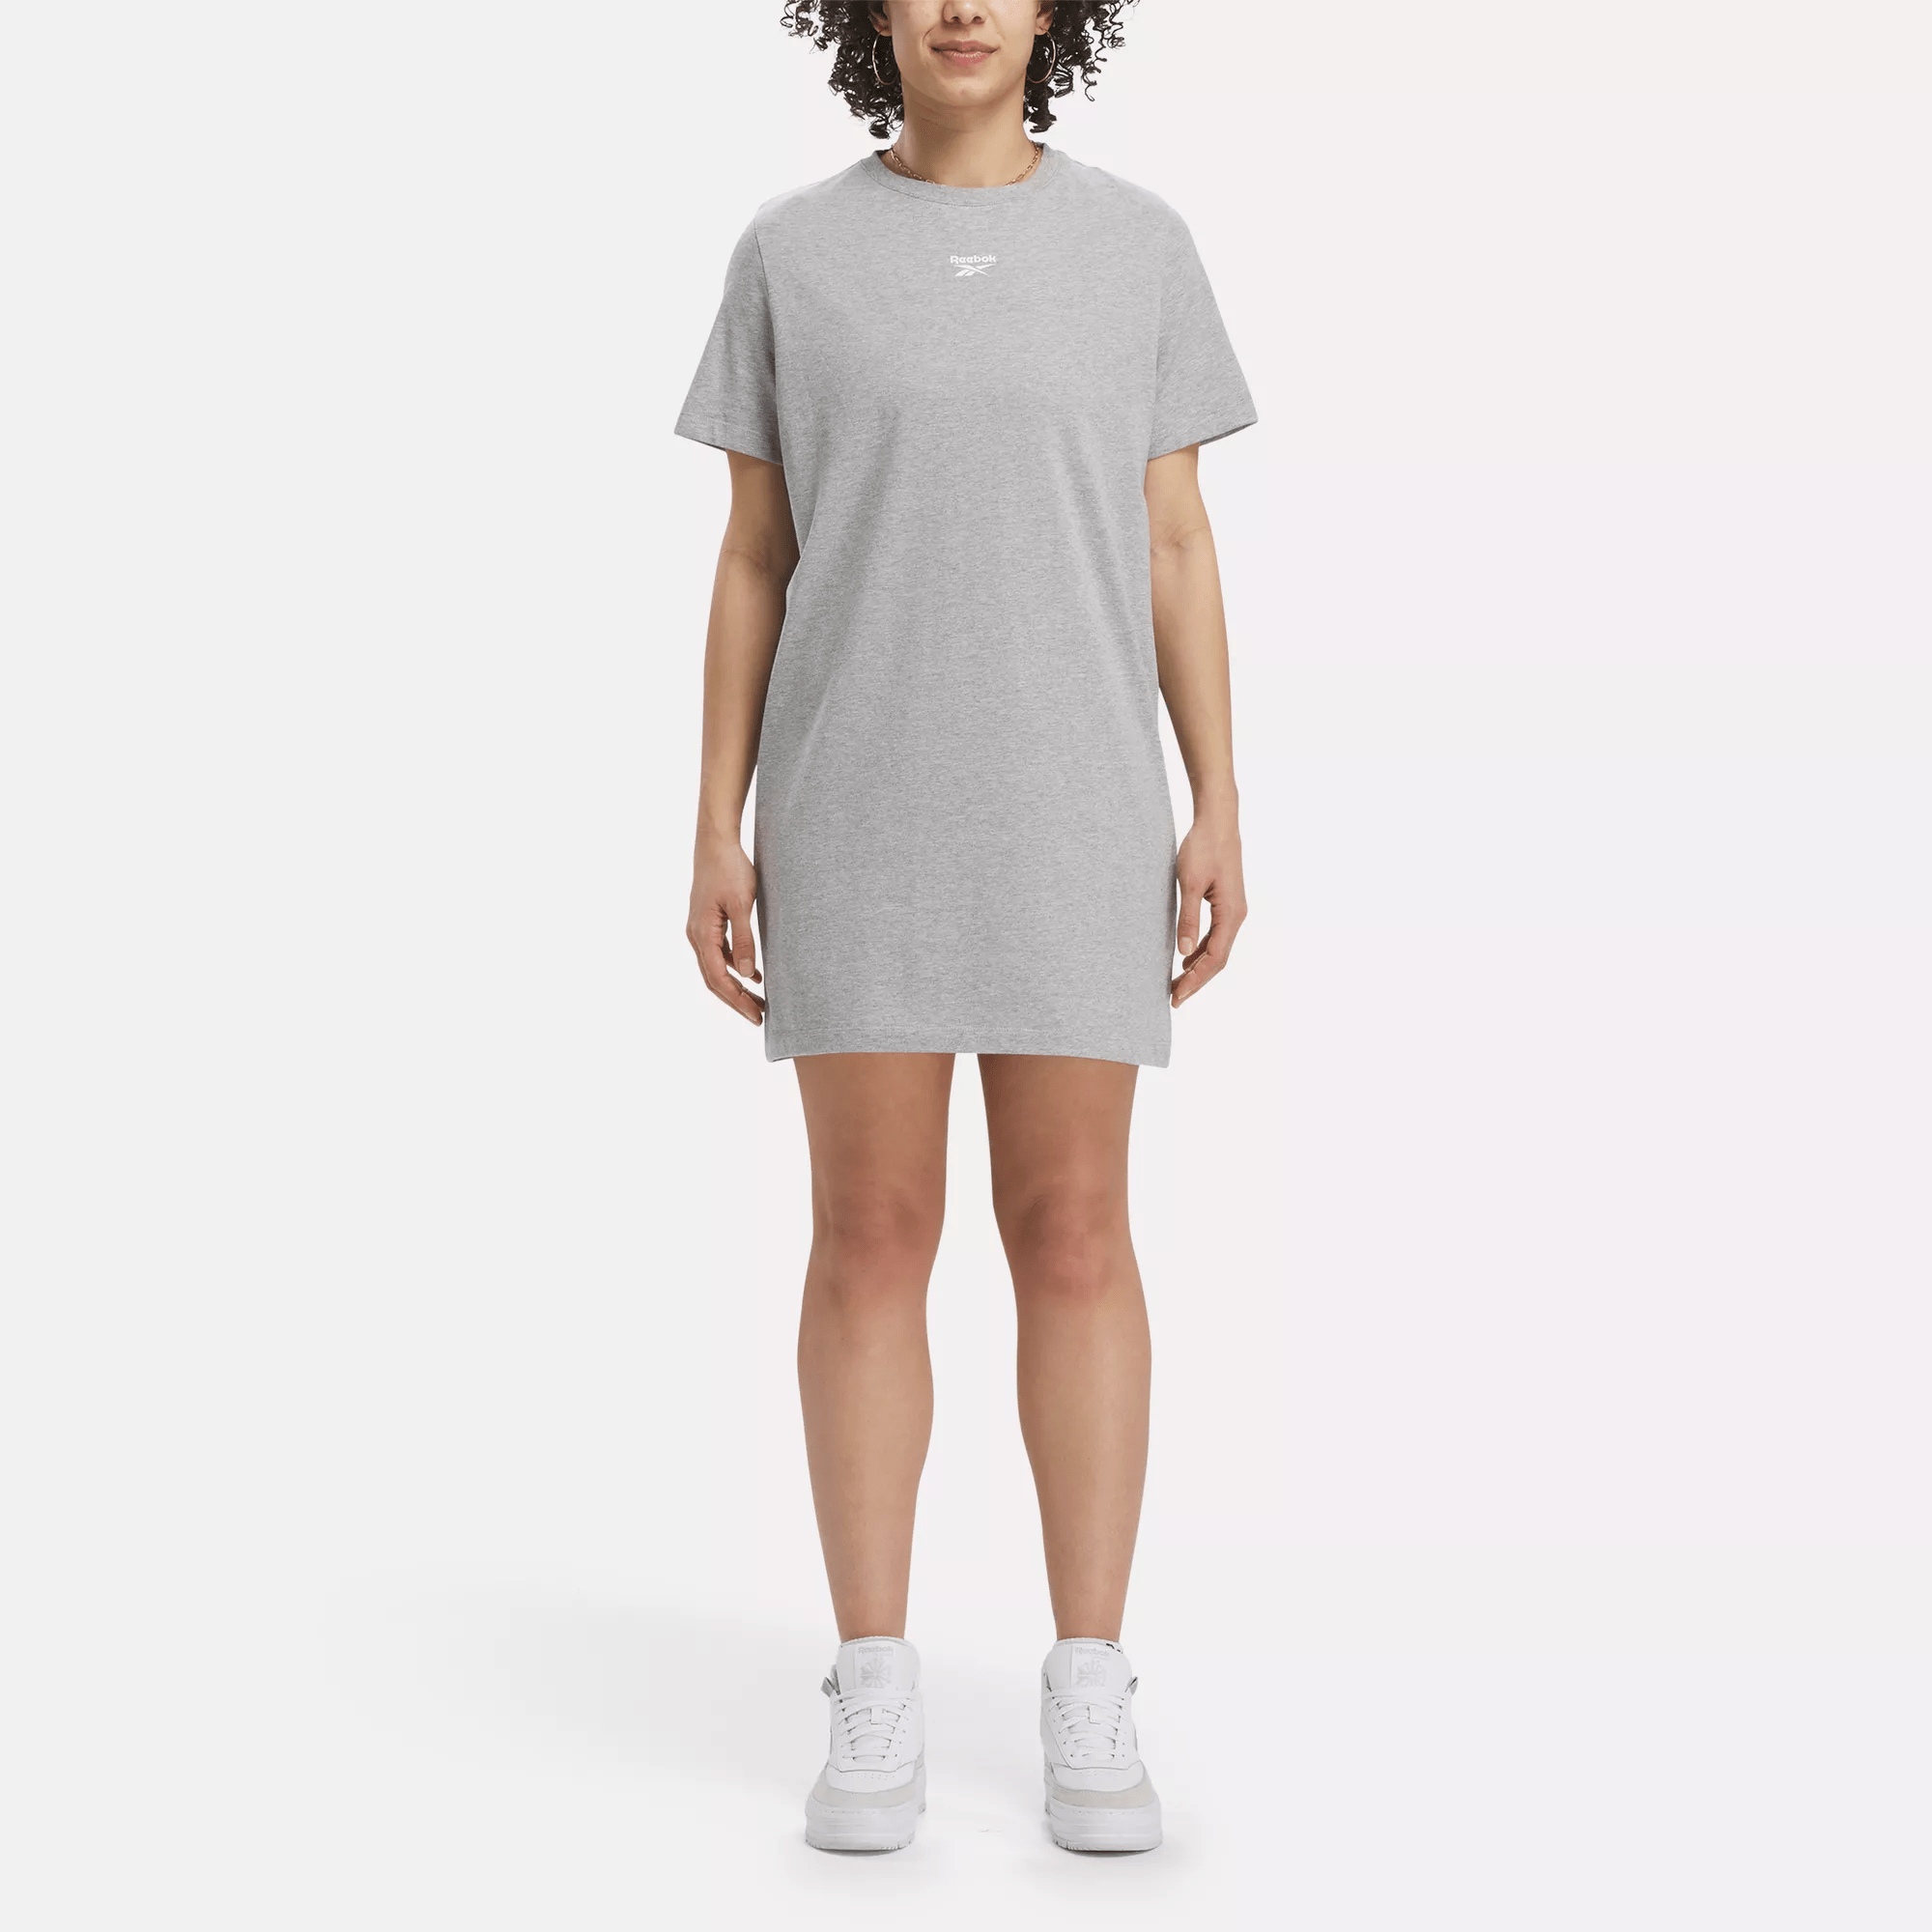 Reebok Identity T-shirt Dress In Grey